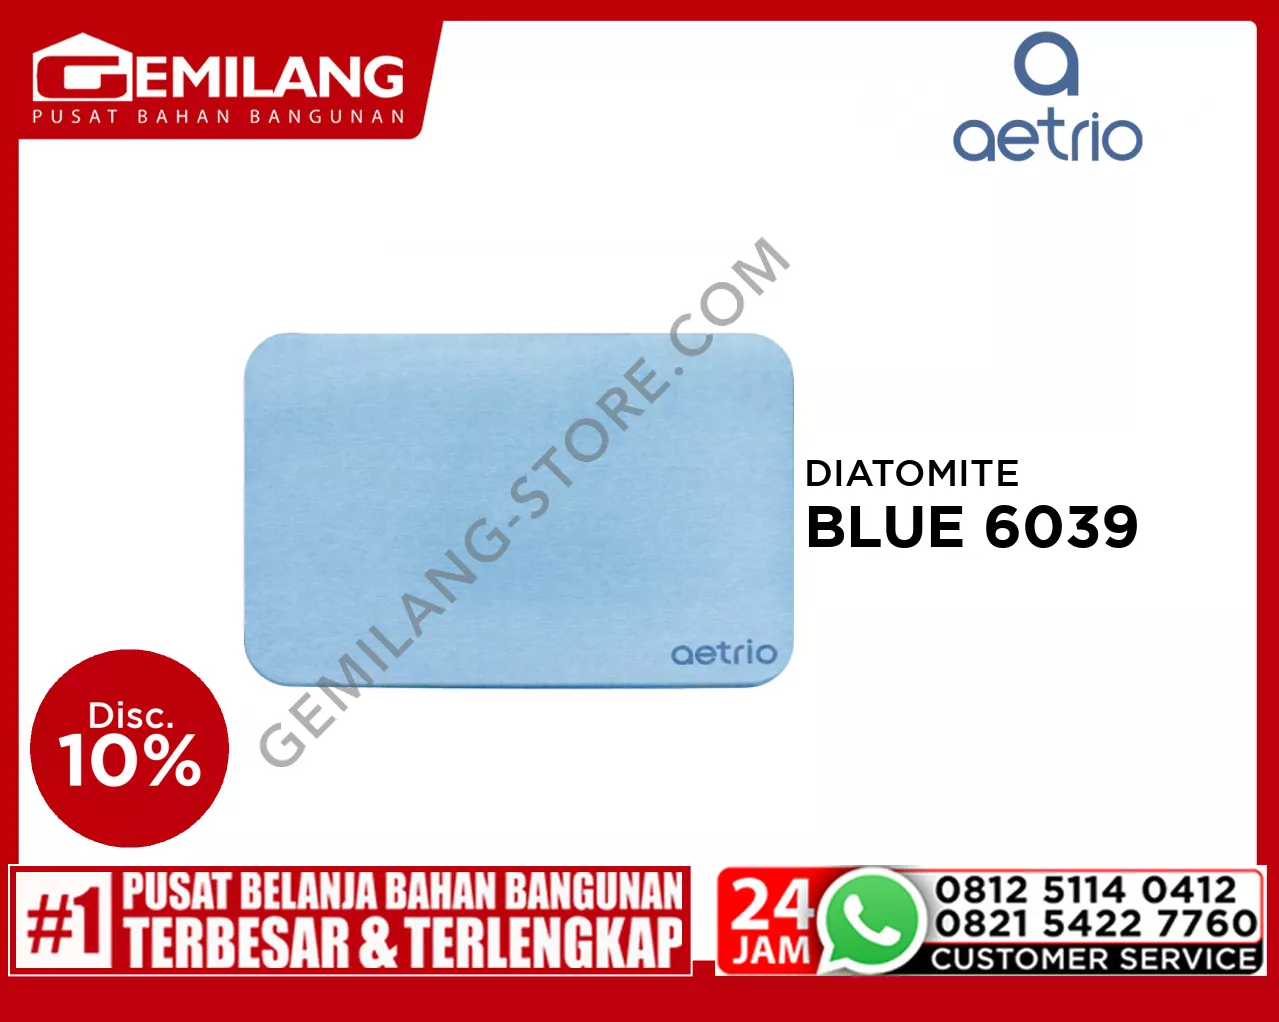 AETRIO DIATOMITE ABSORBENT BLUE 6039 60 x 39mm